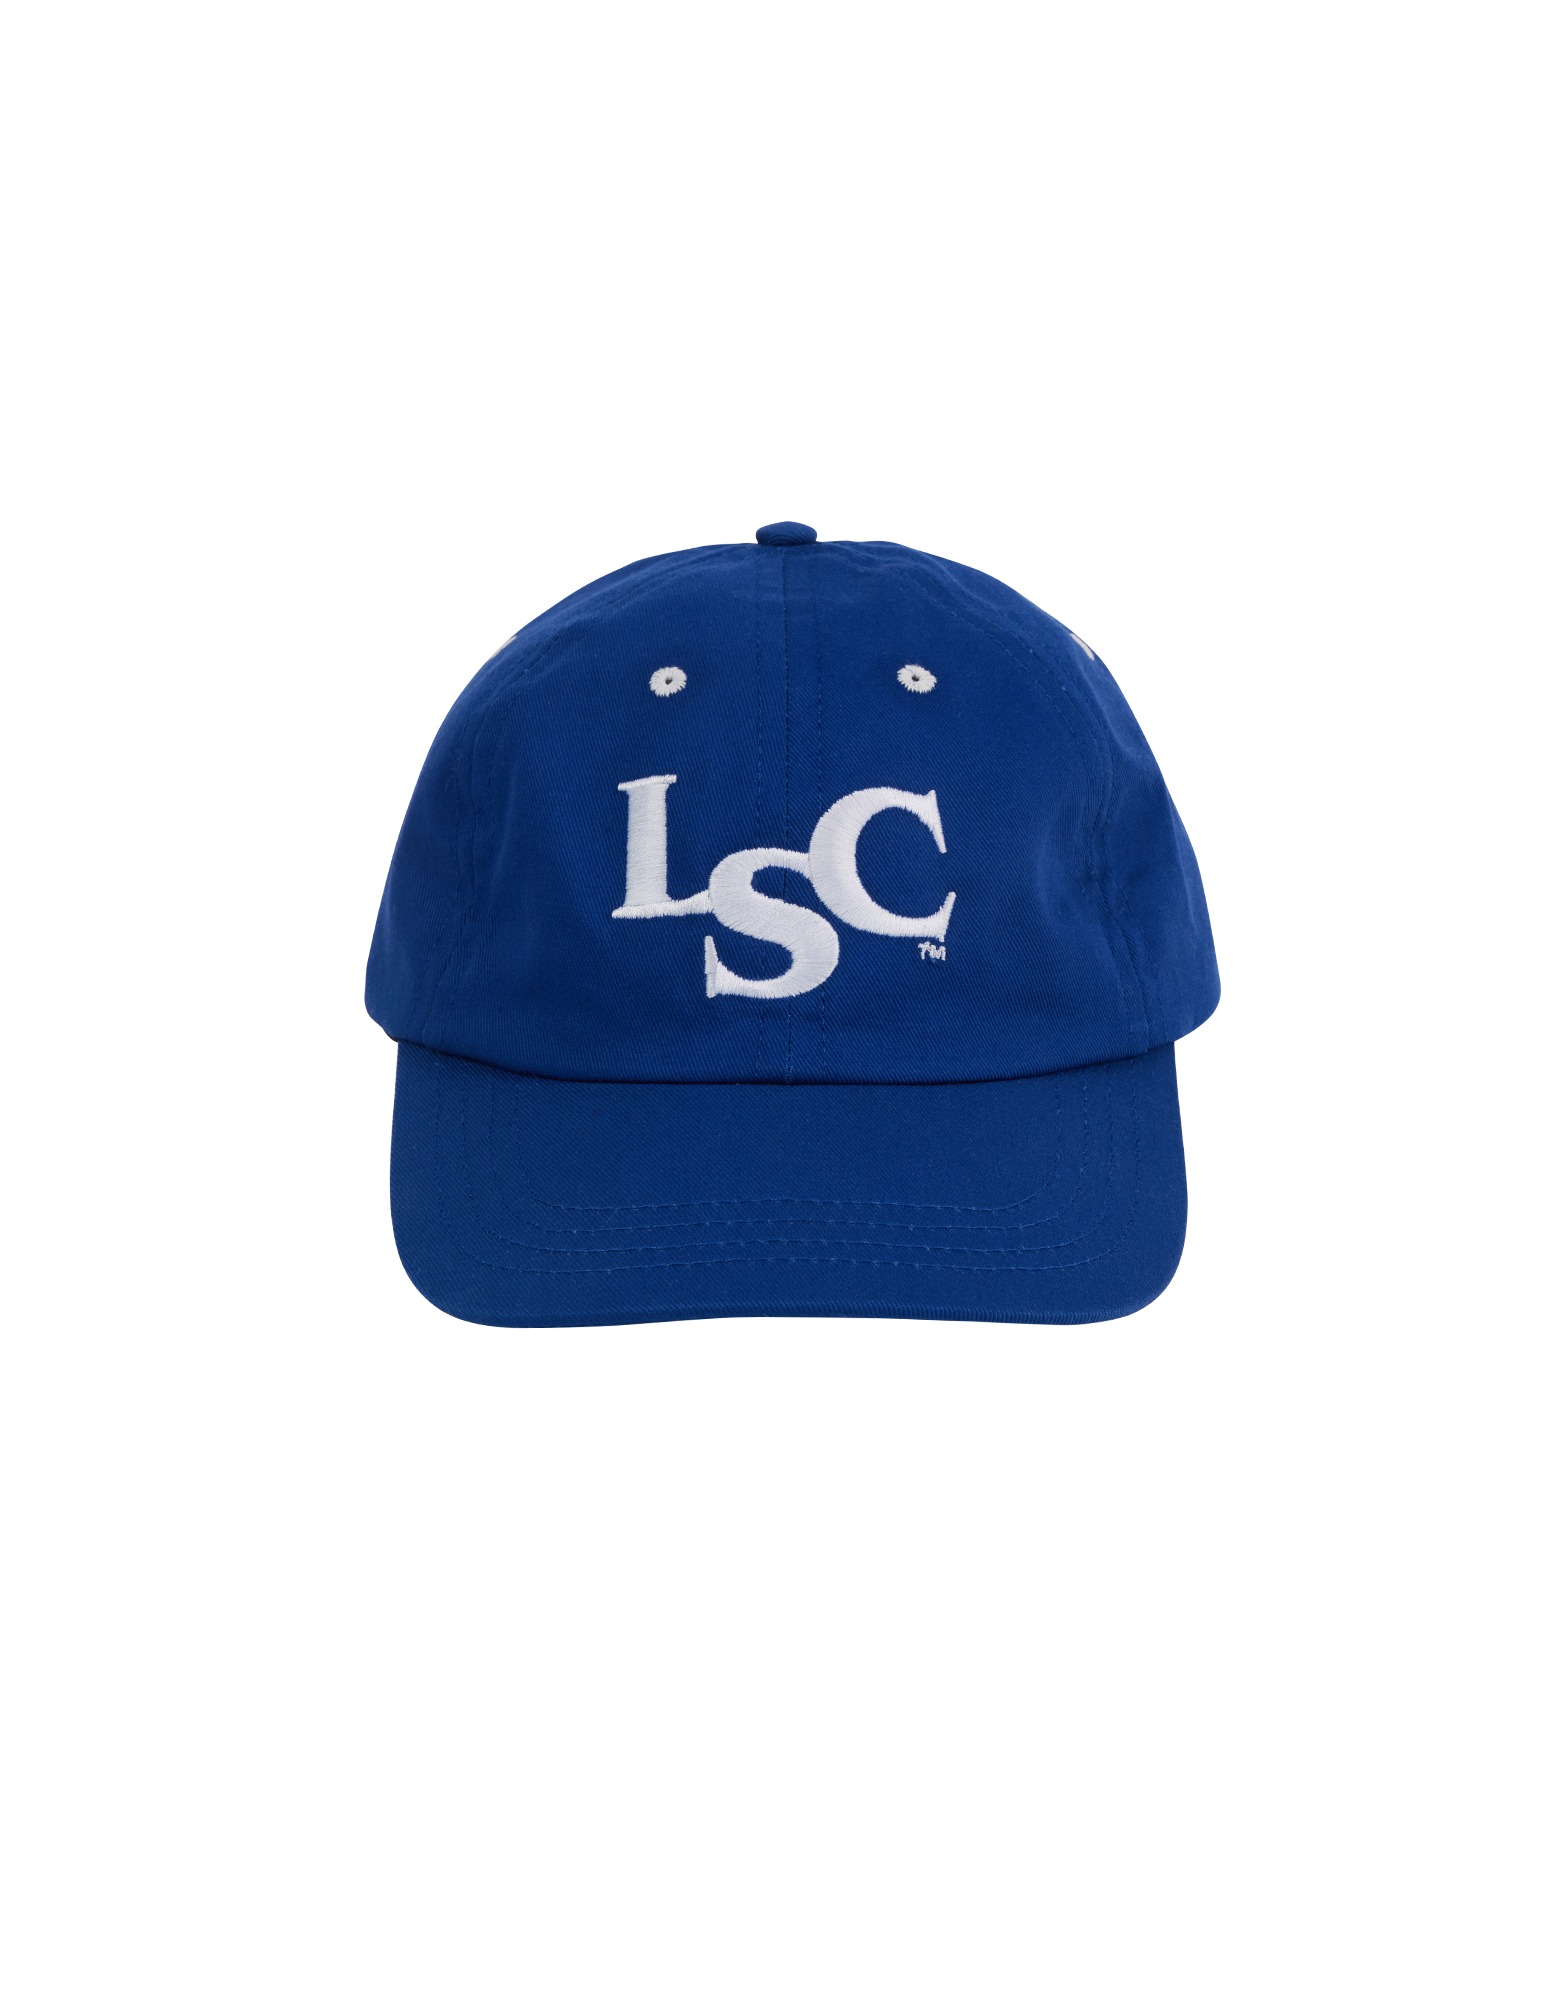 LSC Logo Cap (Royal Blue)